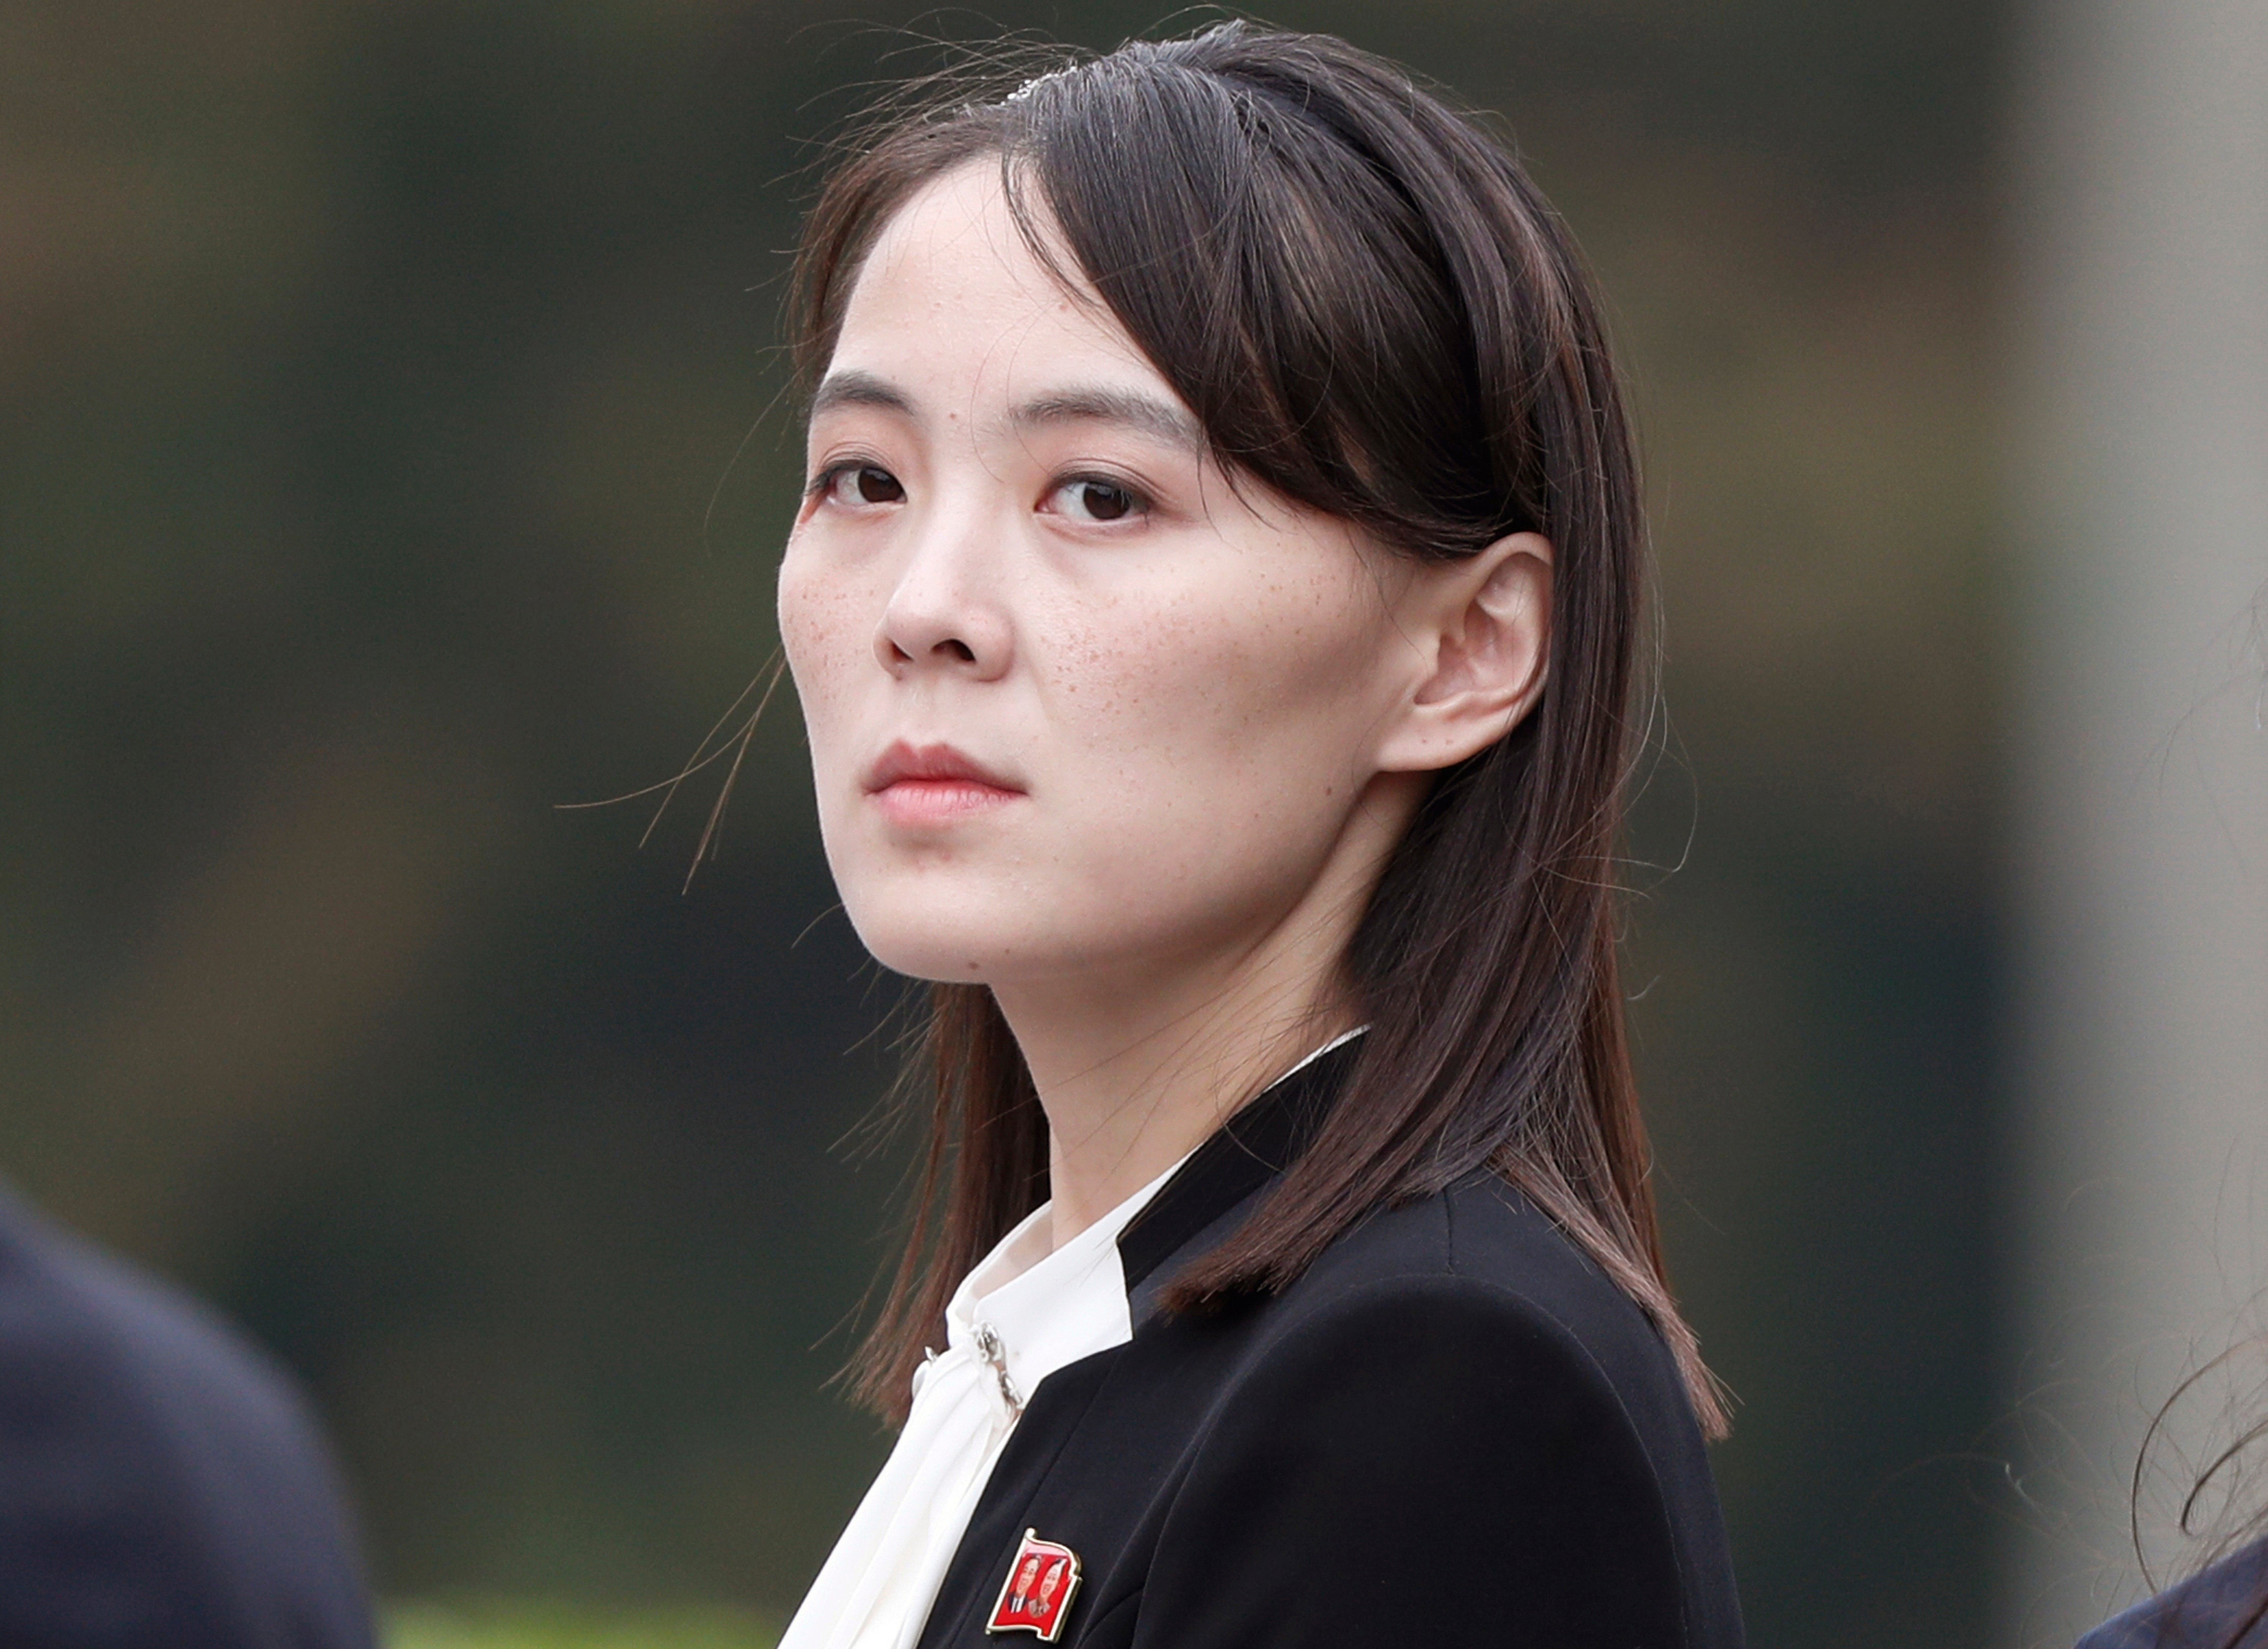 Kim Yo-jong is the influential sister of Kim Jong-un